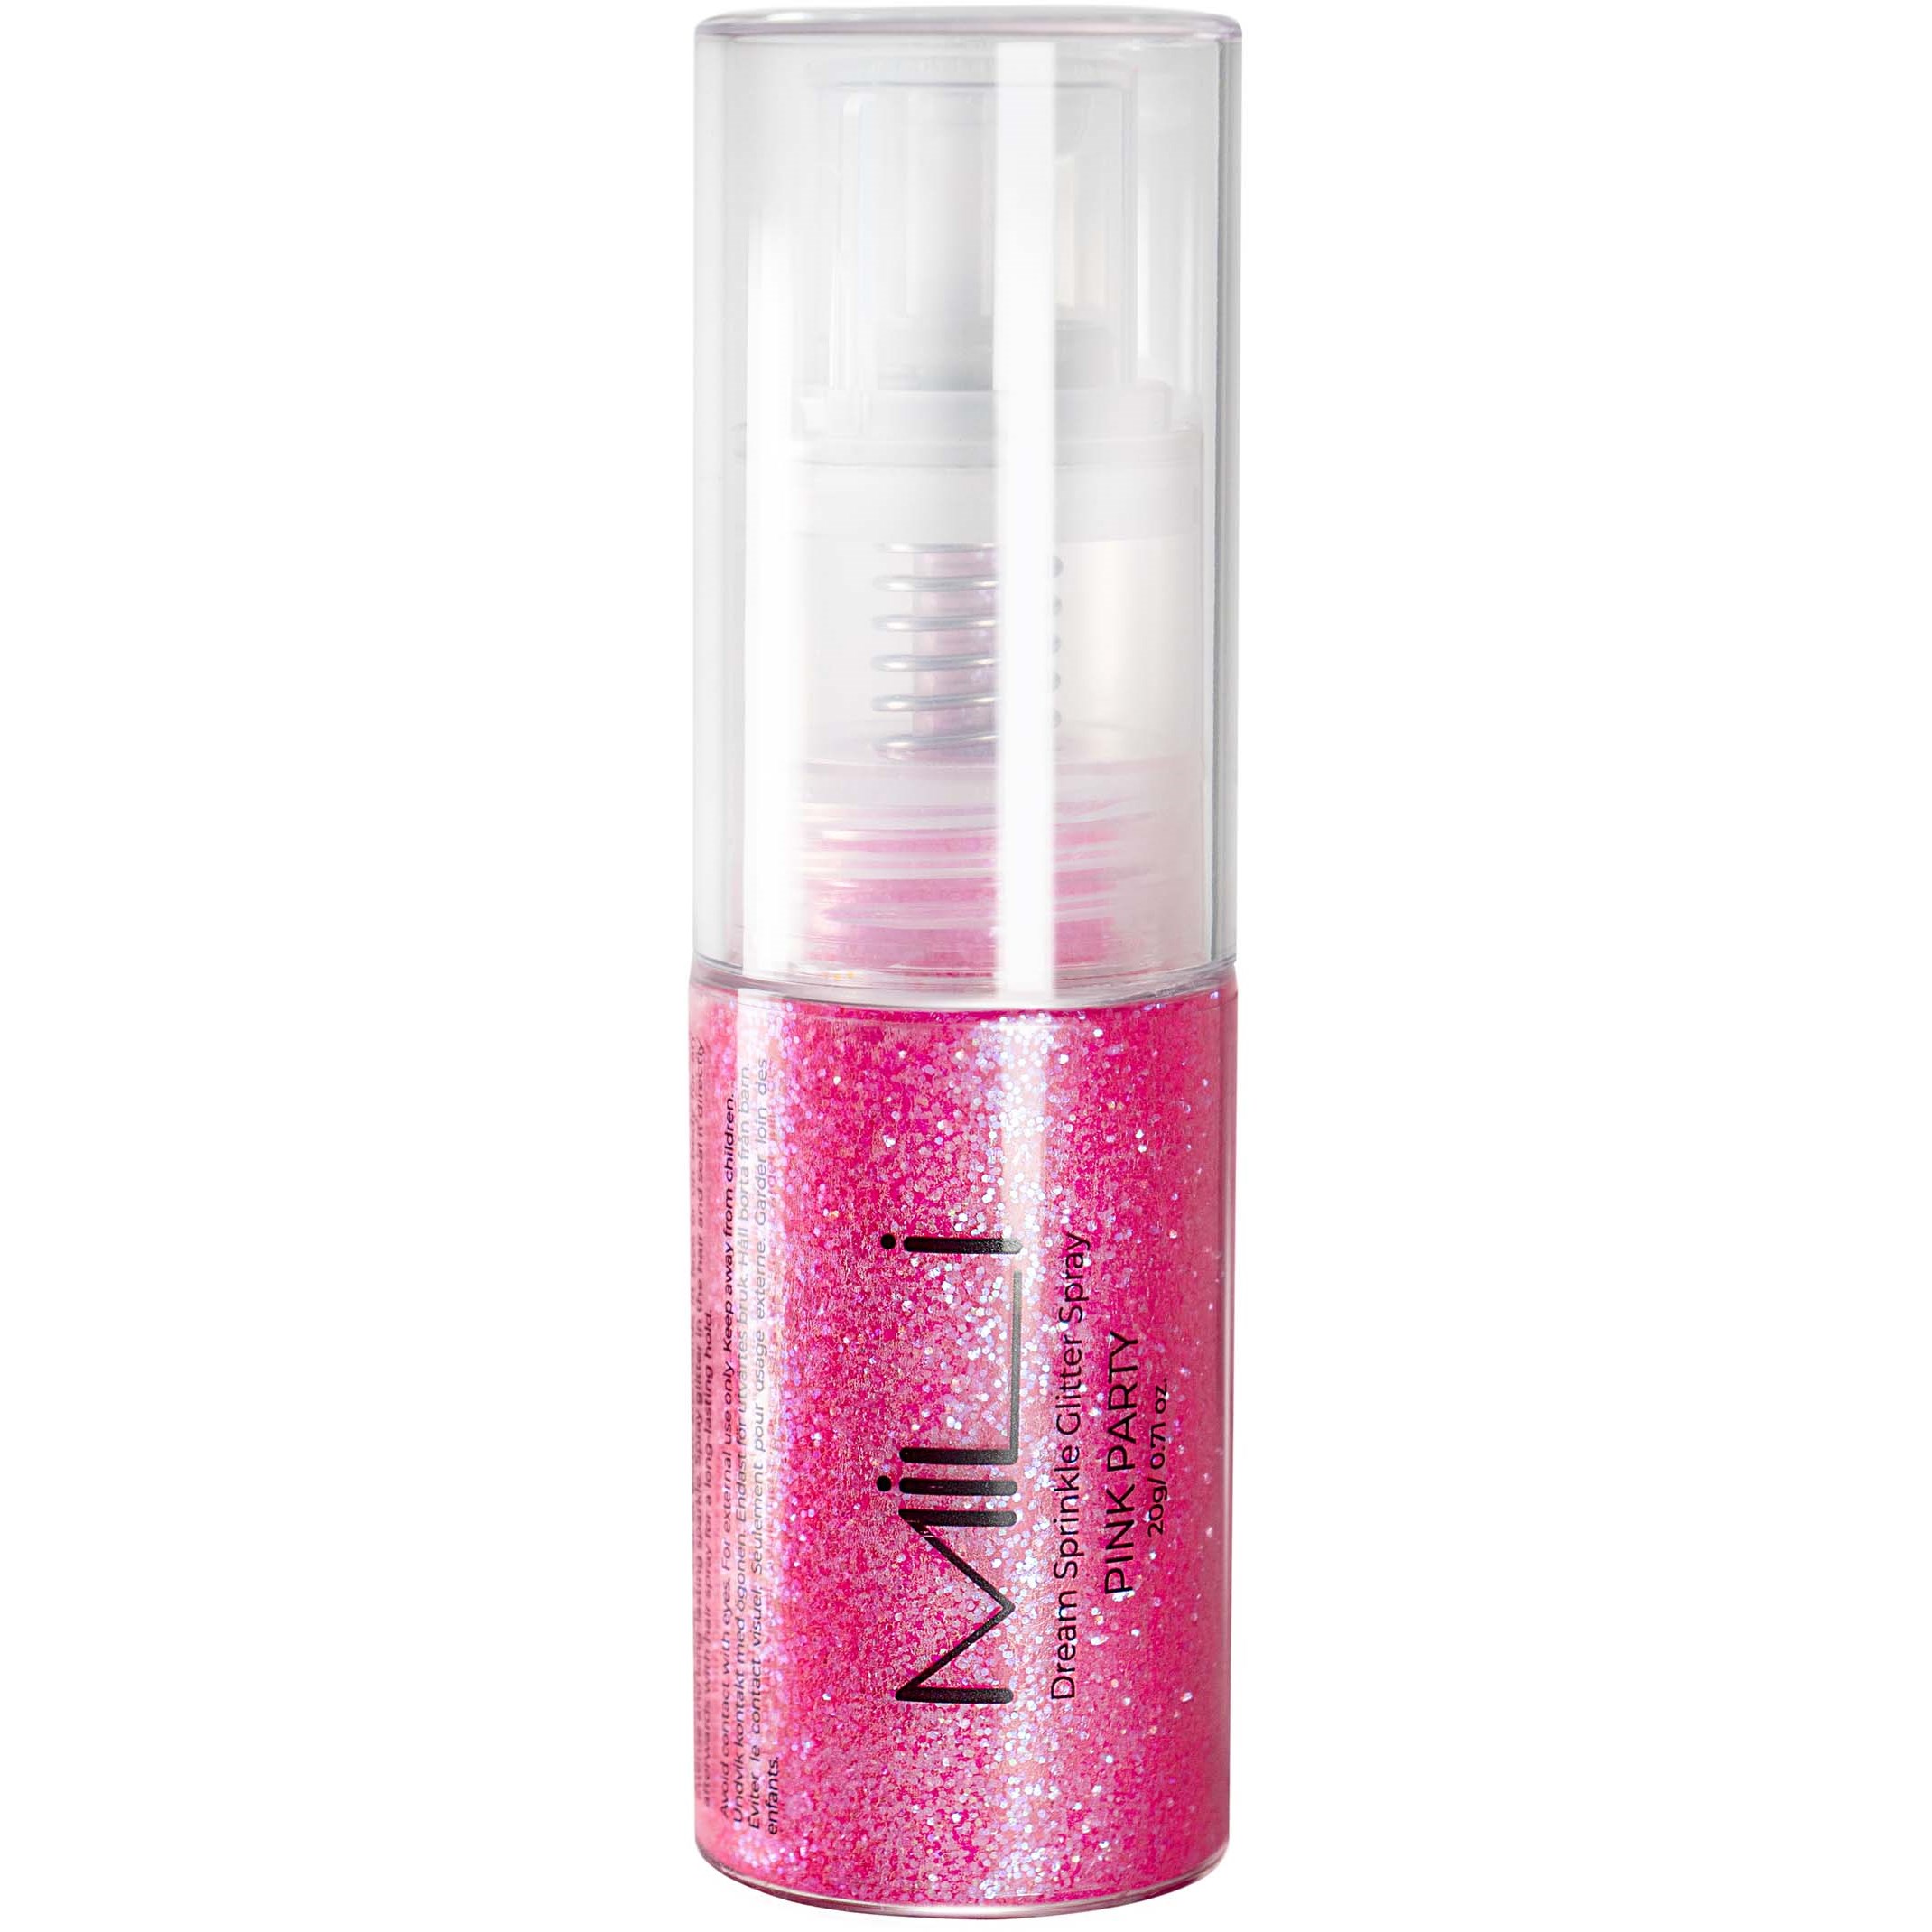 MILI Cosmetics Dream Sprinkle Glitter Spray Pink Party